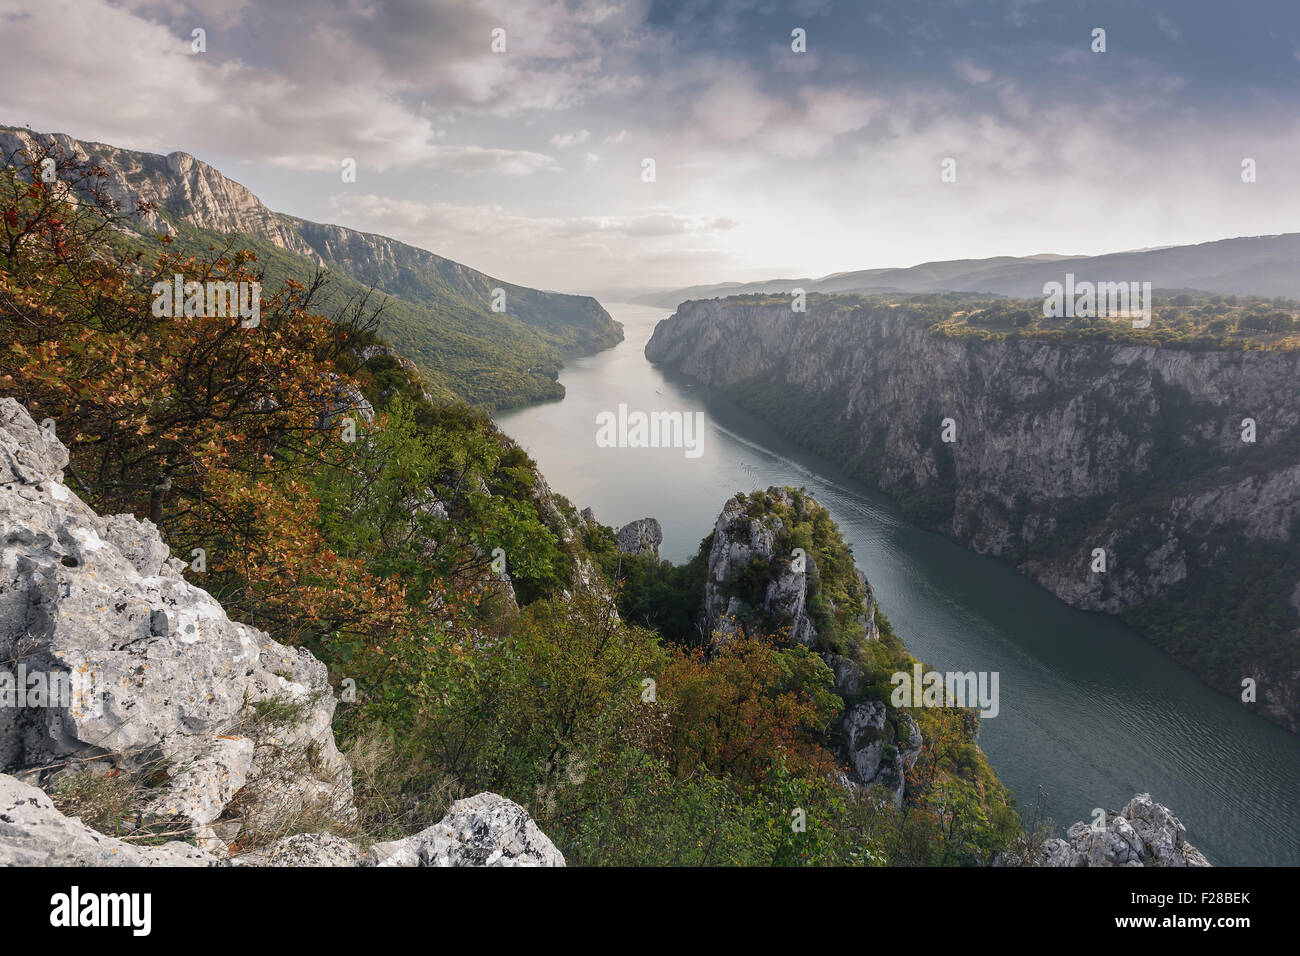 Danube river. Cliffs over Danube river, Djerdap National park, east Serbia Stock Photo